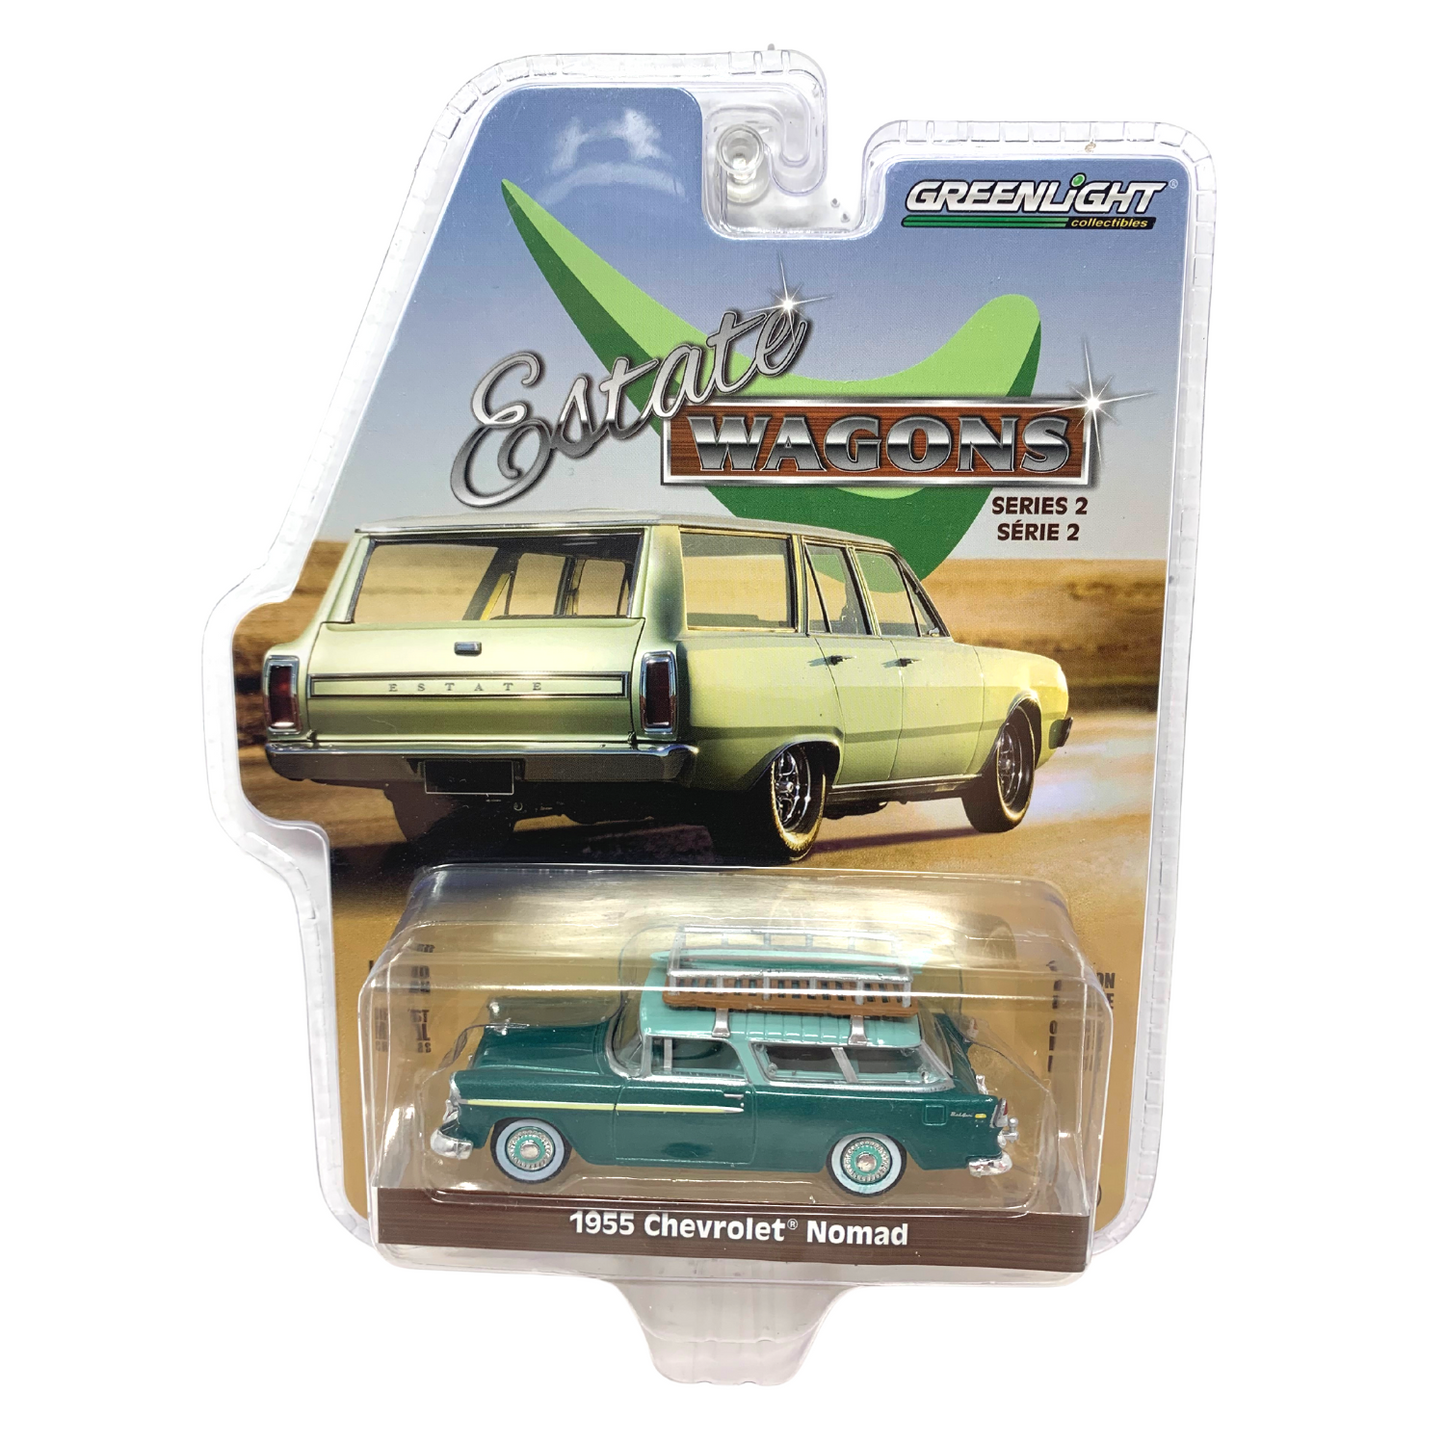 Greenlight Estate Wagons Series 2 1955 Chevrolet Nomad 1:64 Diecast